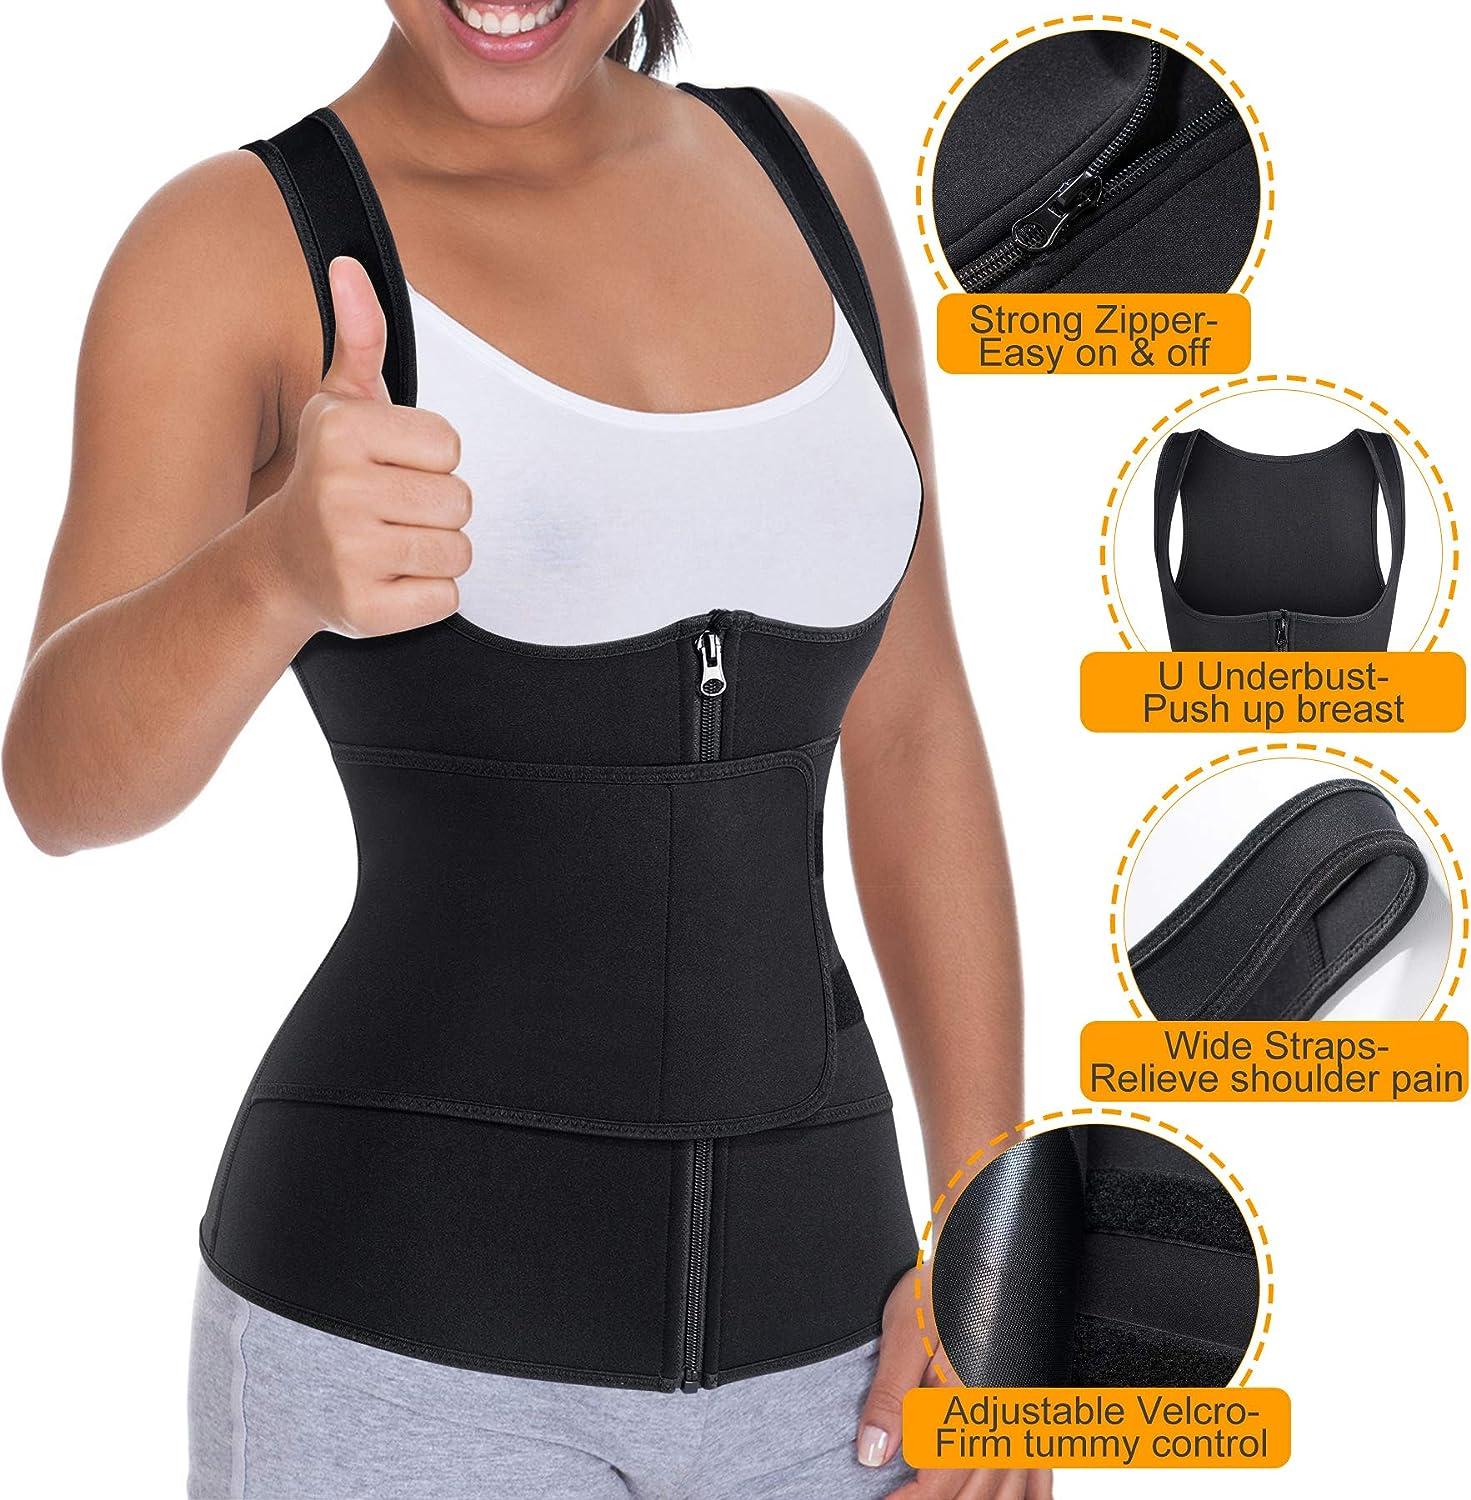 GAODI Women Waist Trainer Vest Workout Slim Corset Neoprene Sauna